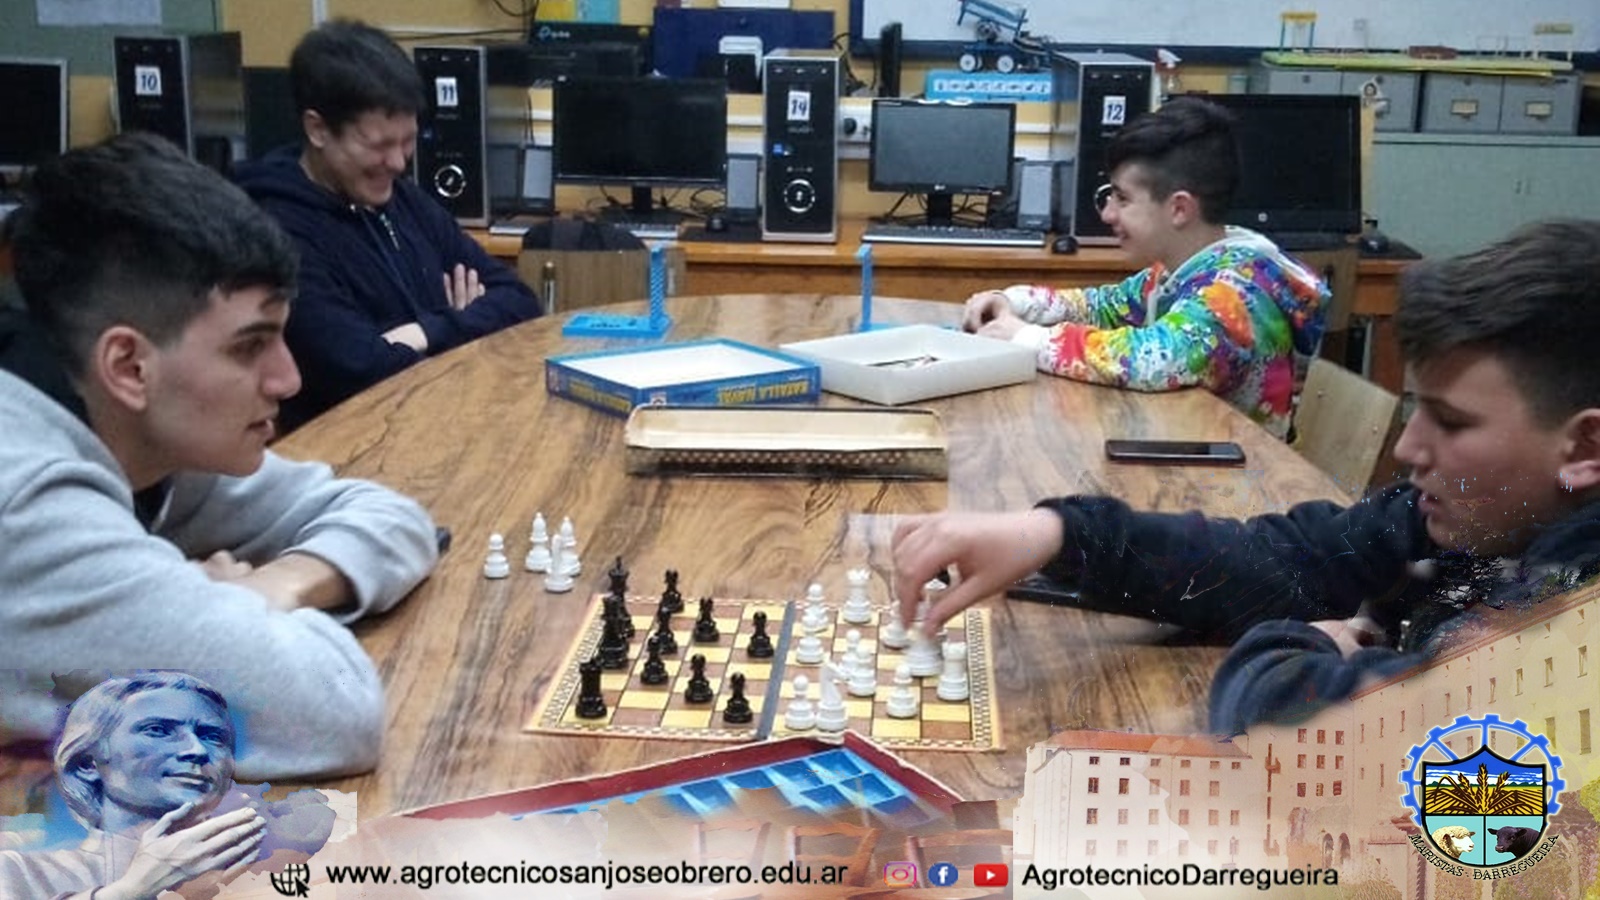 Alumnos residentes del Agrotécnico de Darregueira jugando ajedrez.